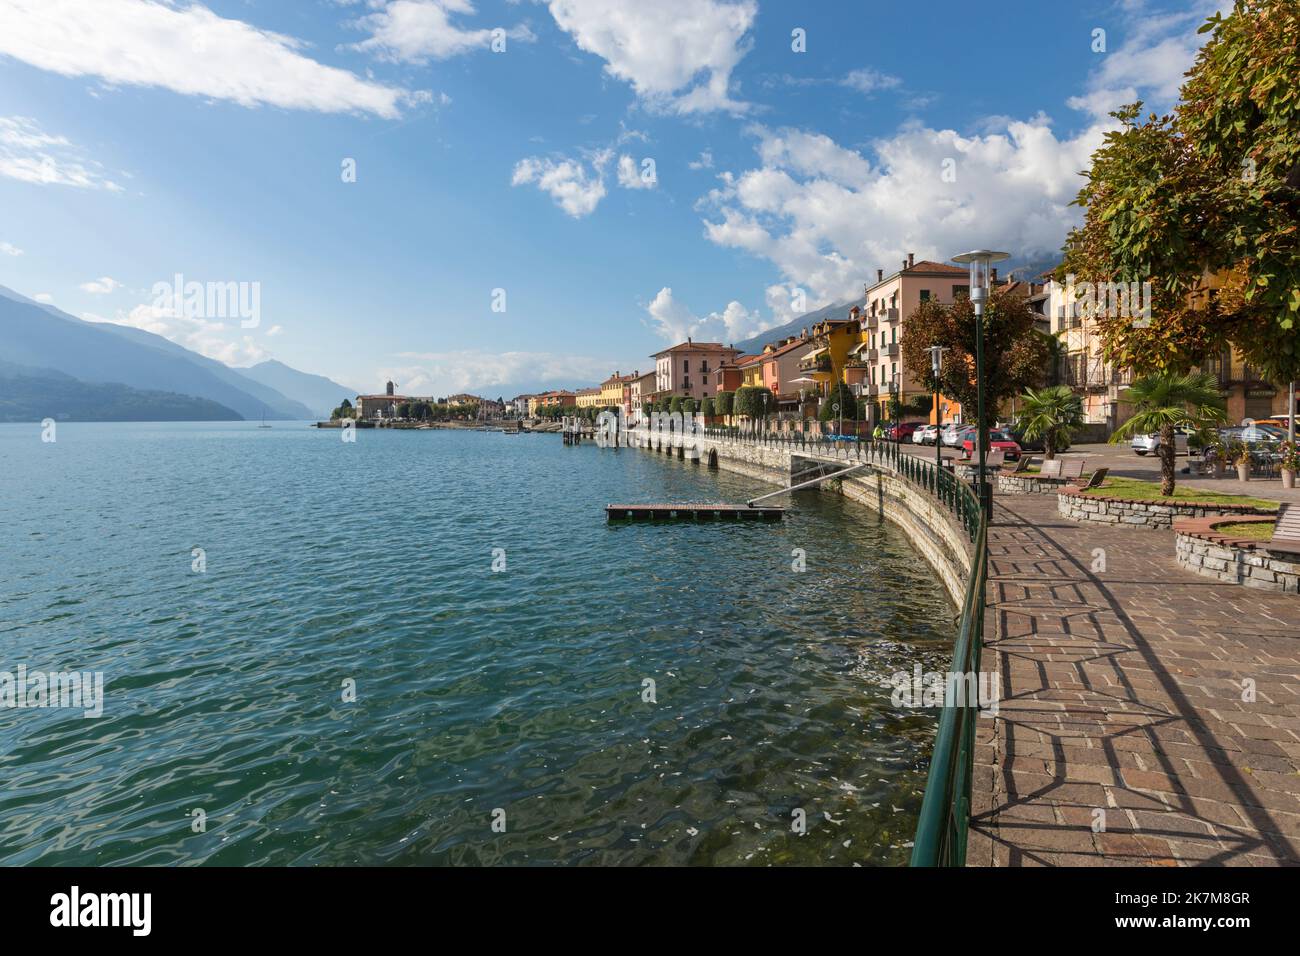 Boardwalk of Gravedona ed Uniti and Lake Como on a sunny late summer day Stock Photo